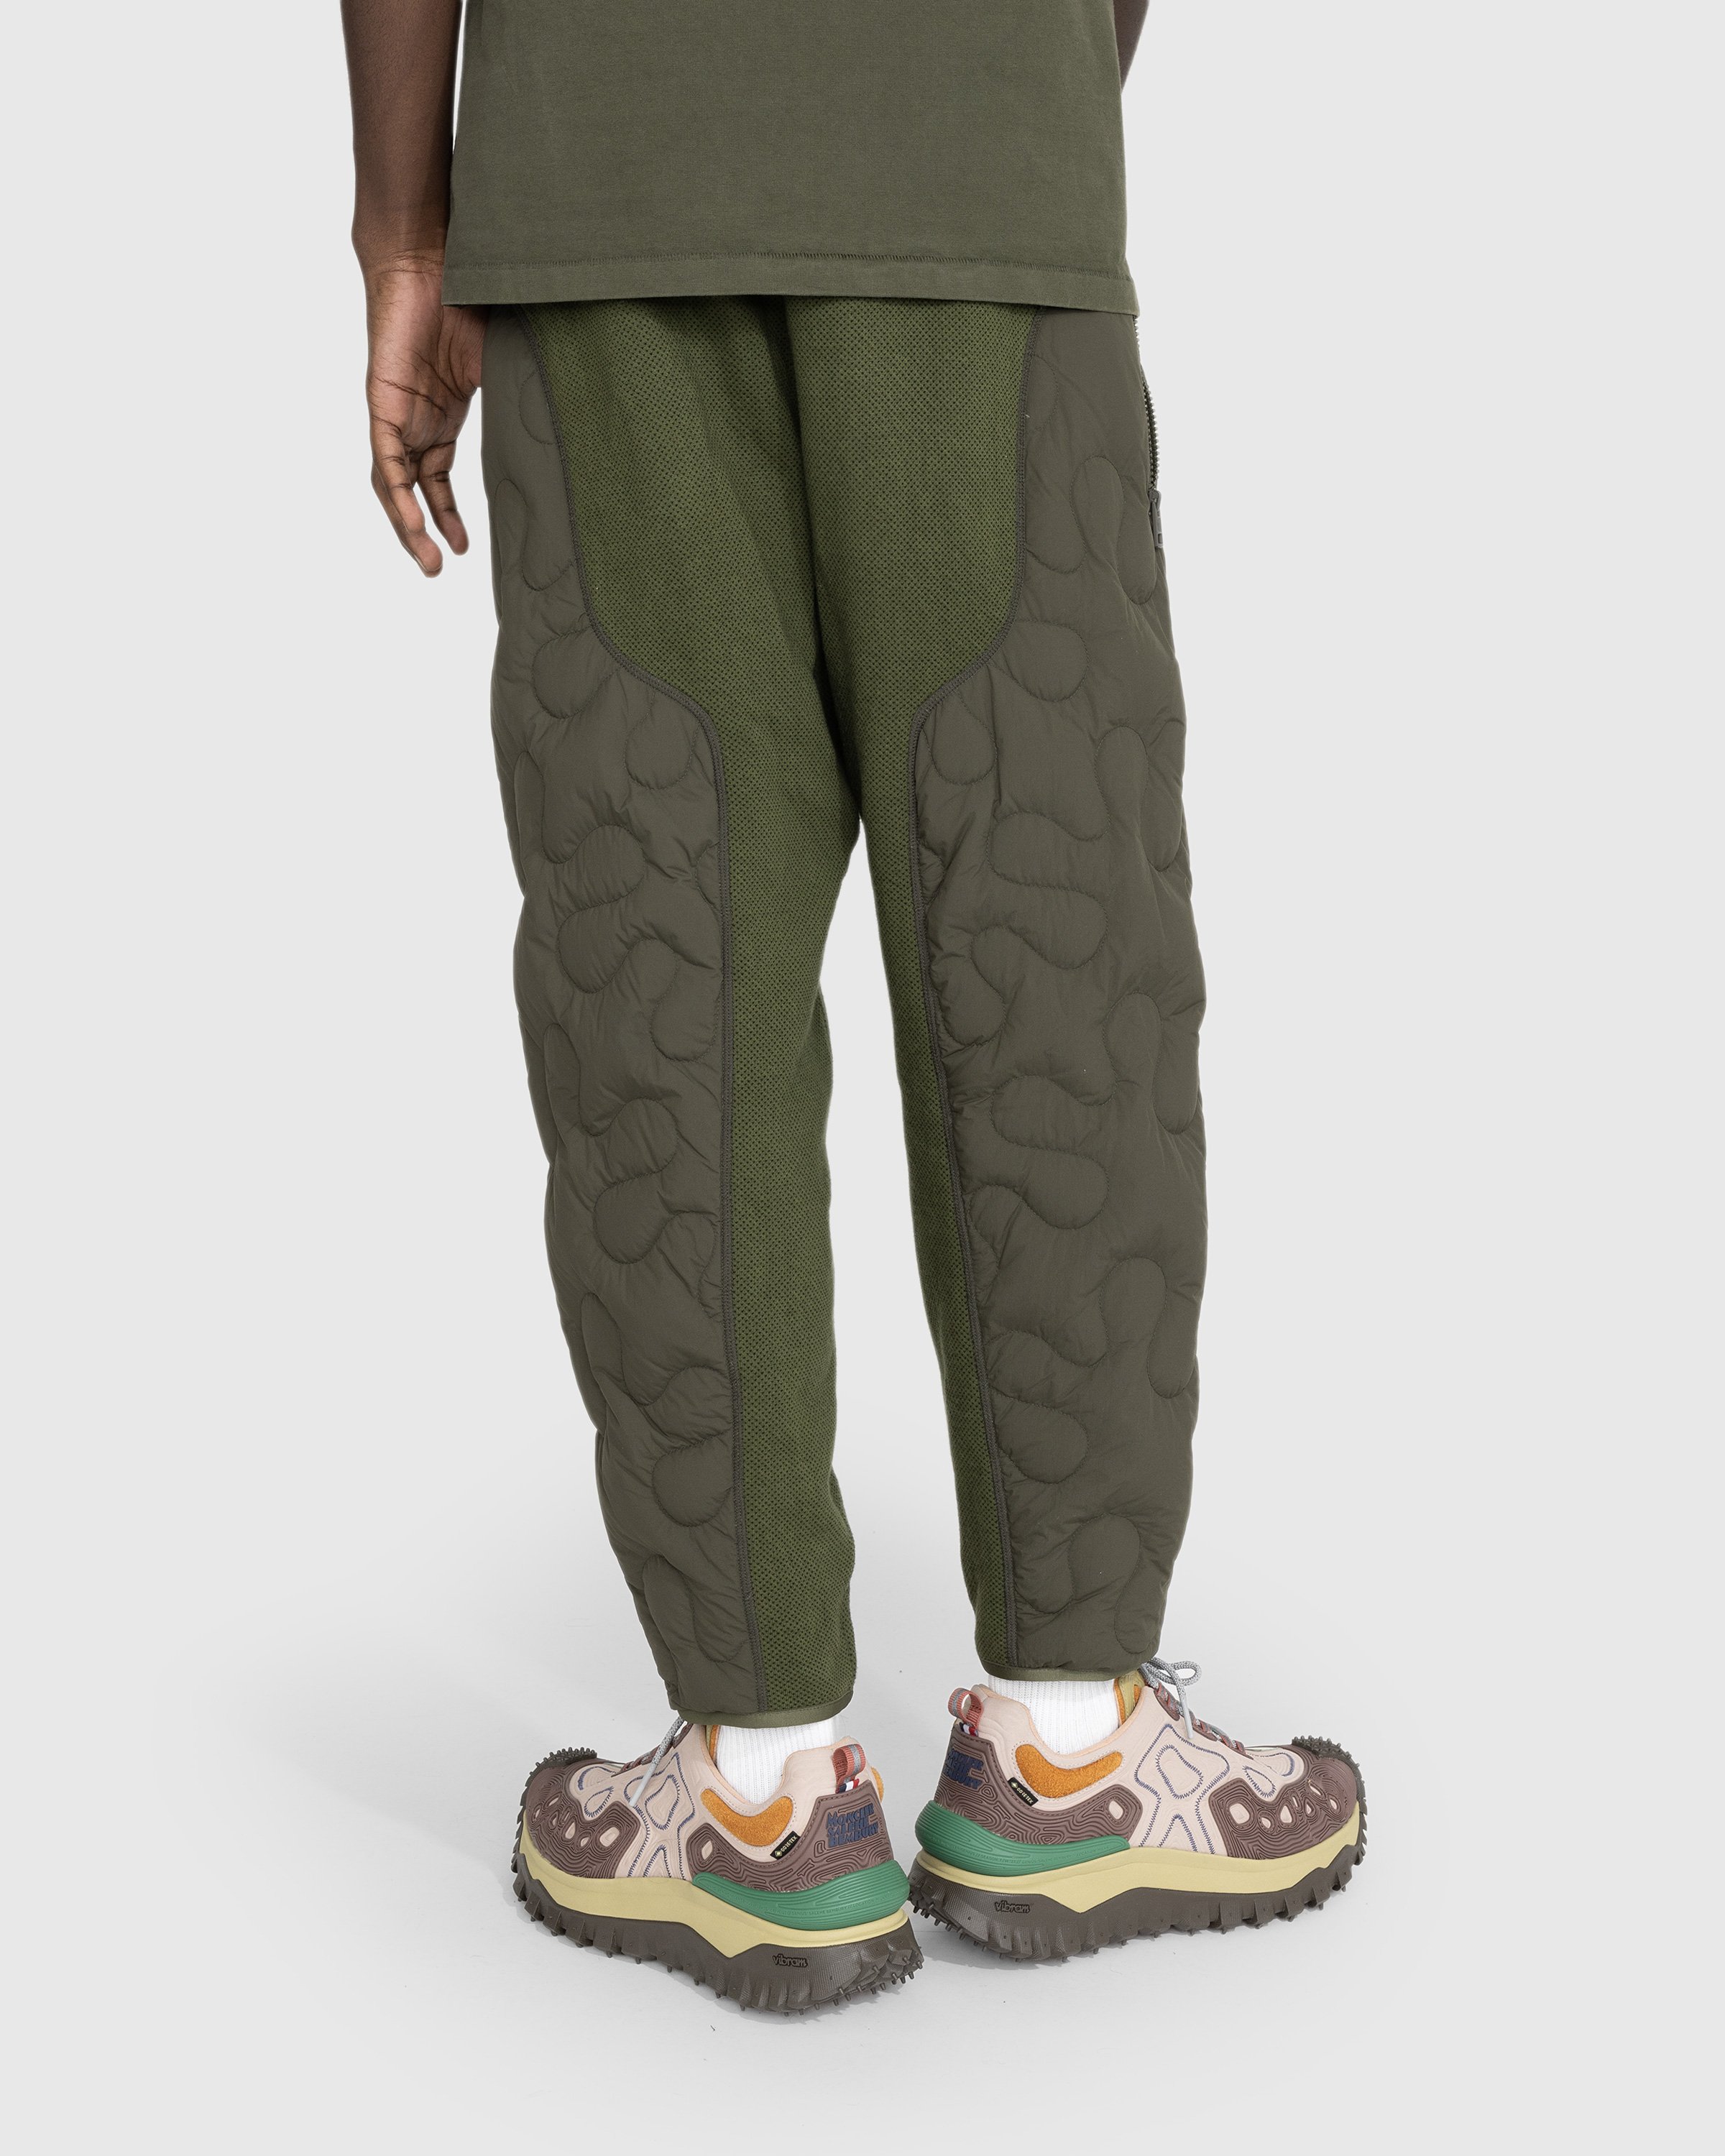 Moncler x Salehe Bembury - Padded Pants Green - Clothing - Green - Image 3